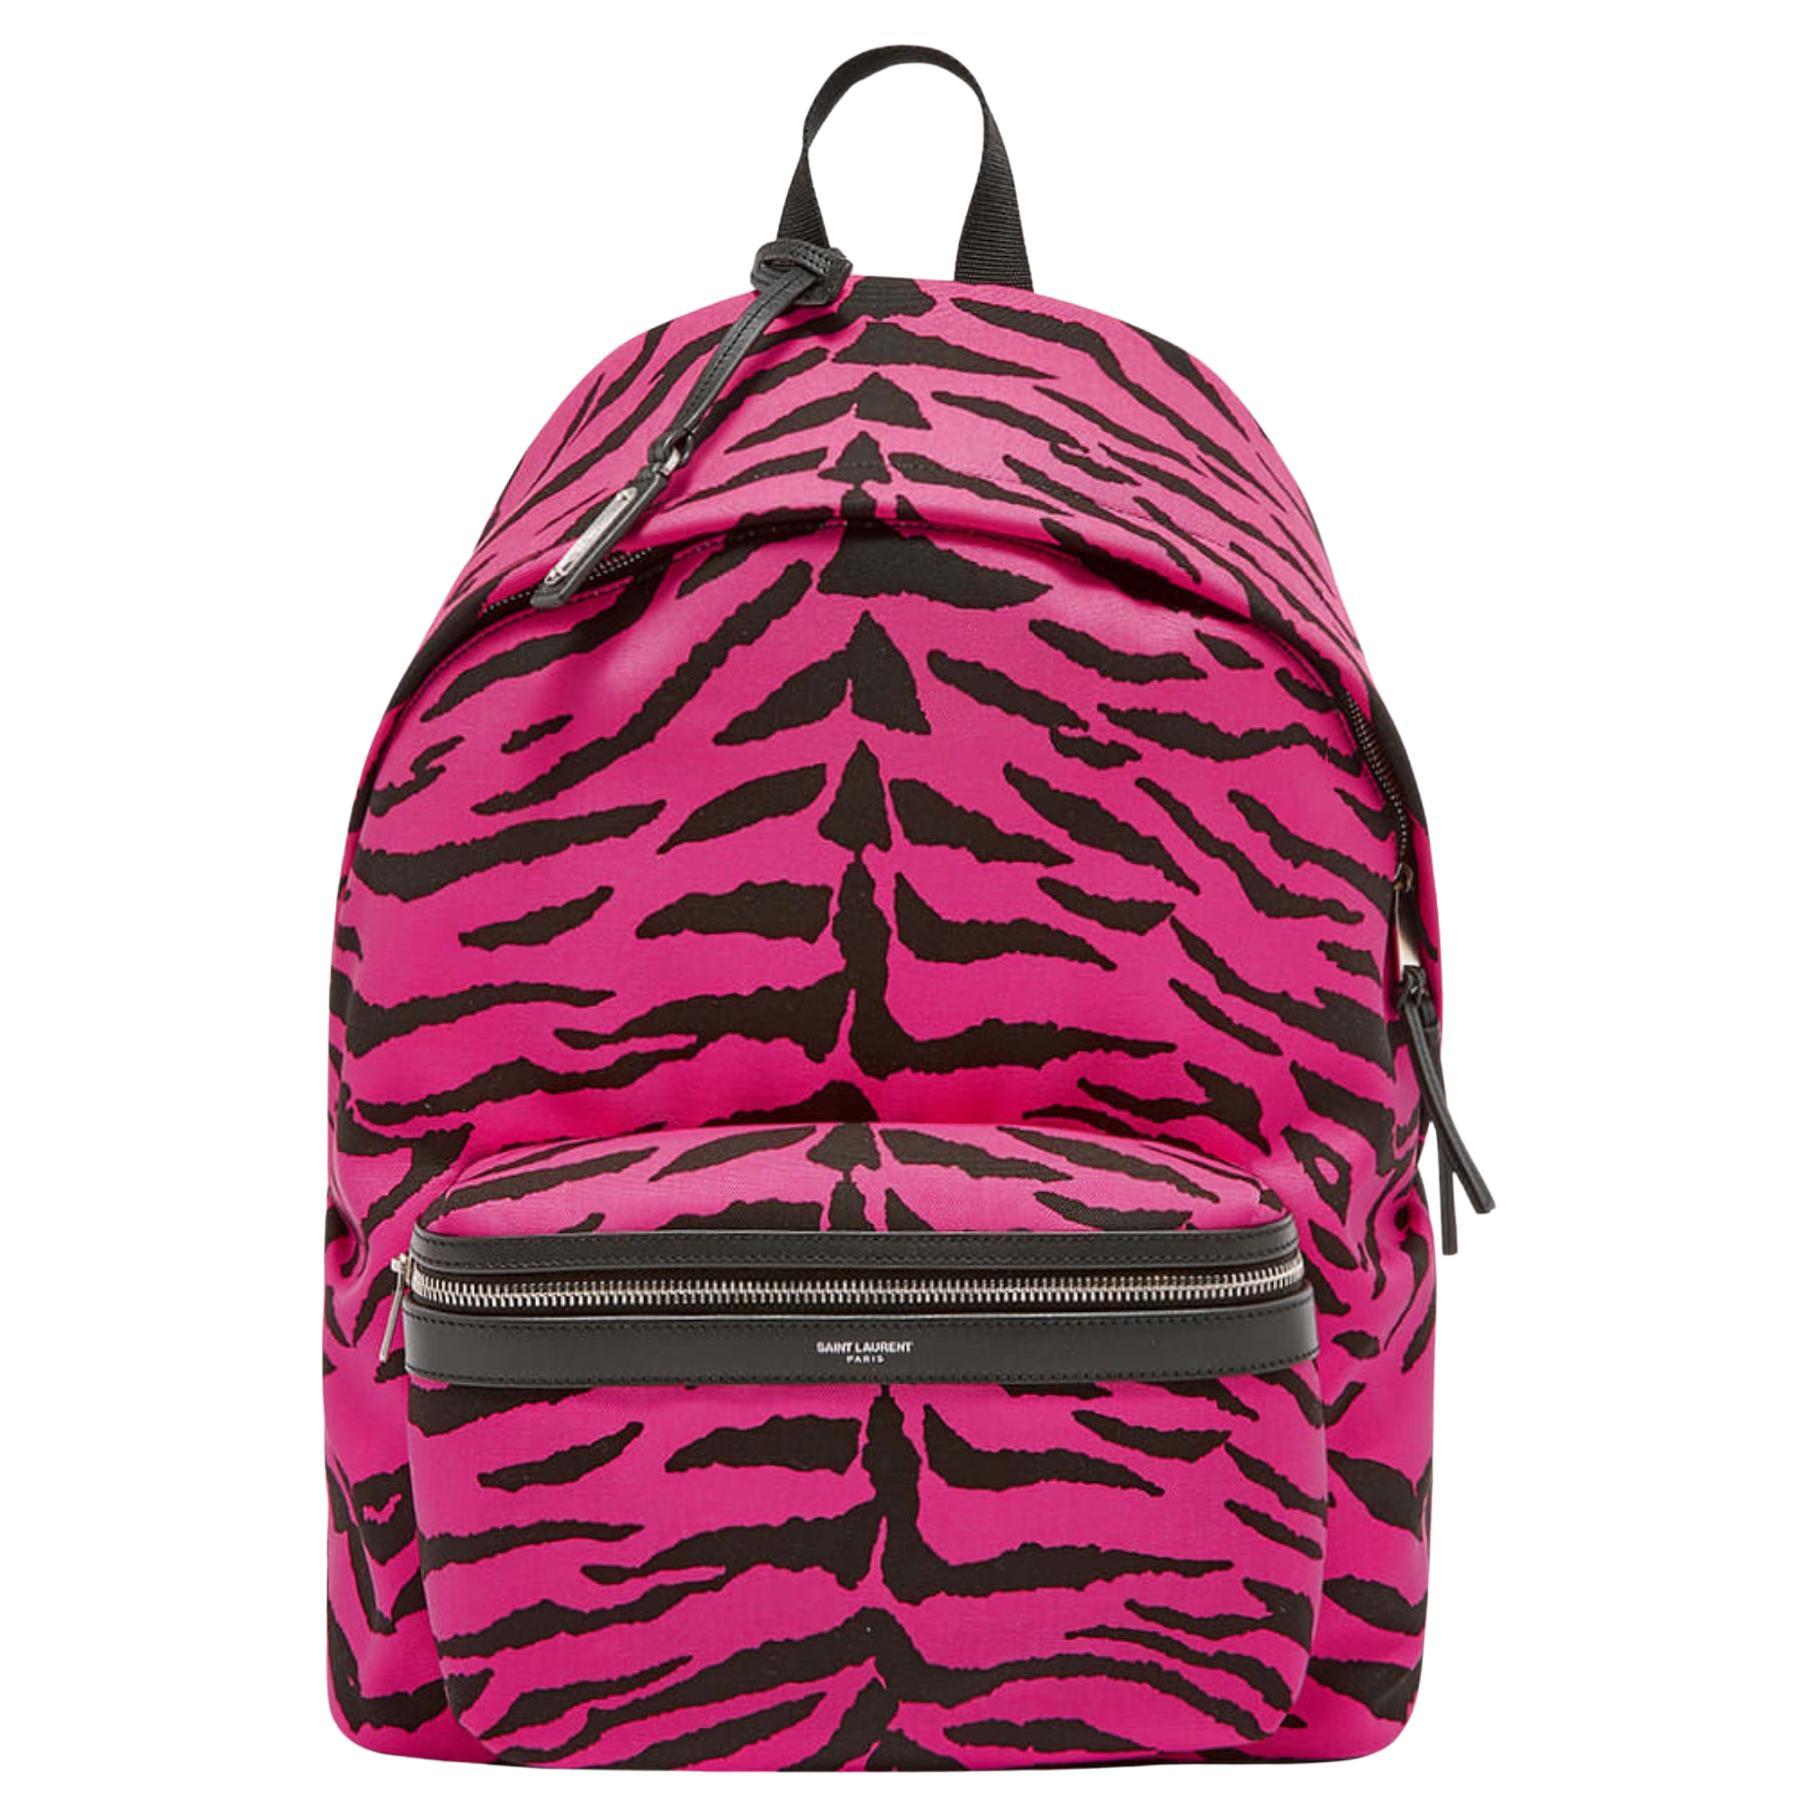 Saint Laurent Mens Pink & Black Zebra Print 'City' Backpack